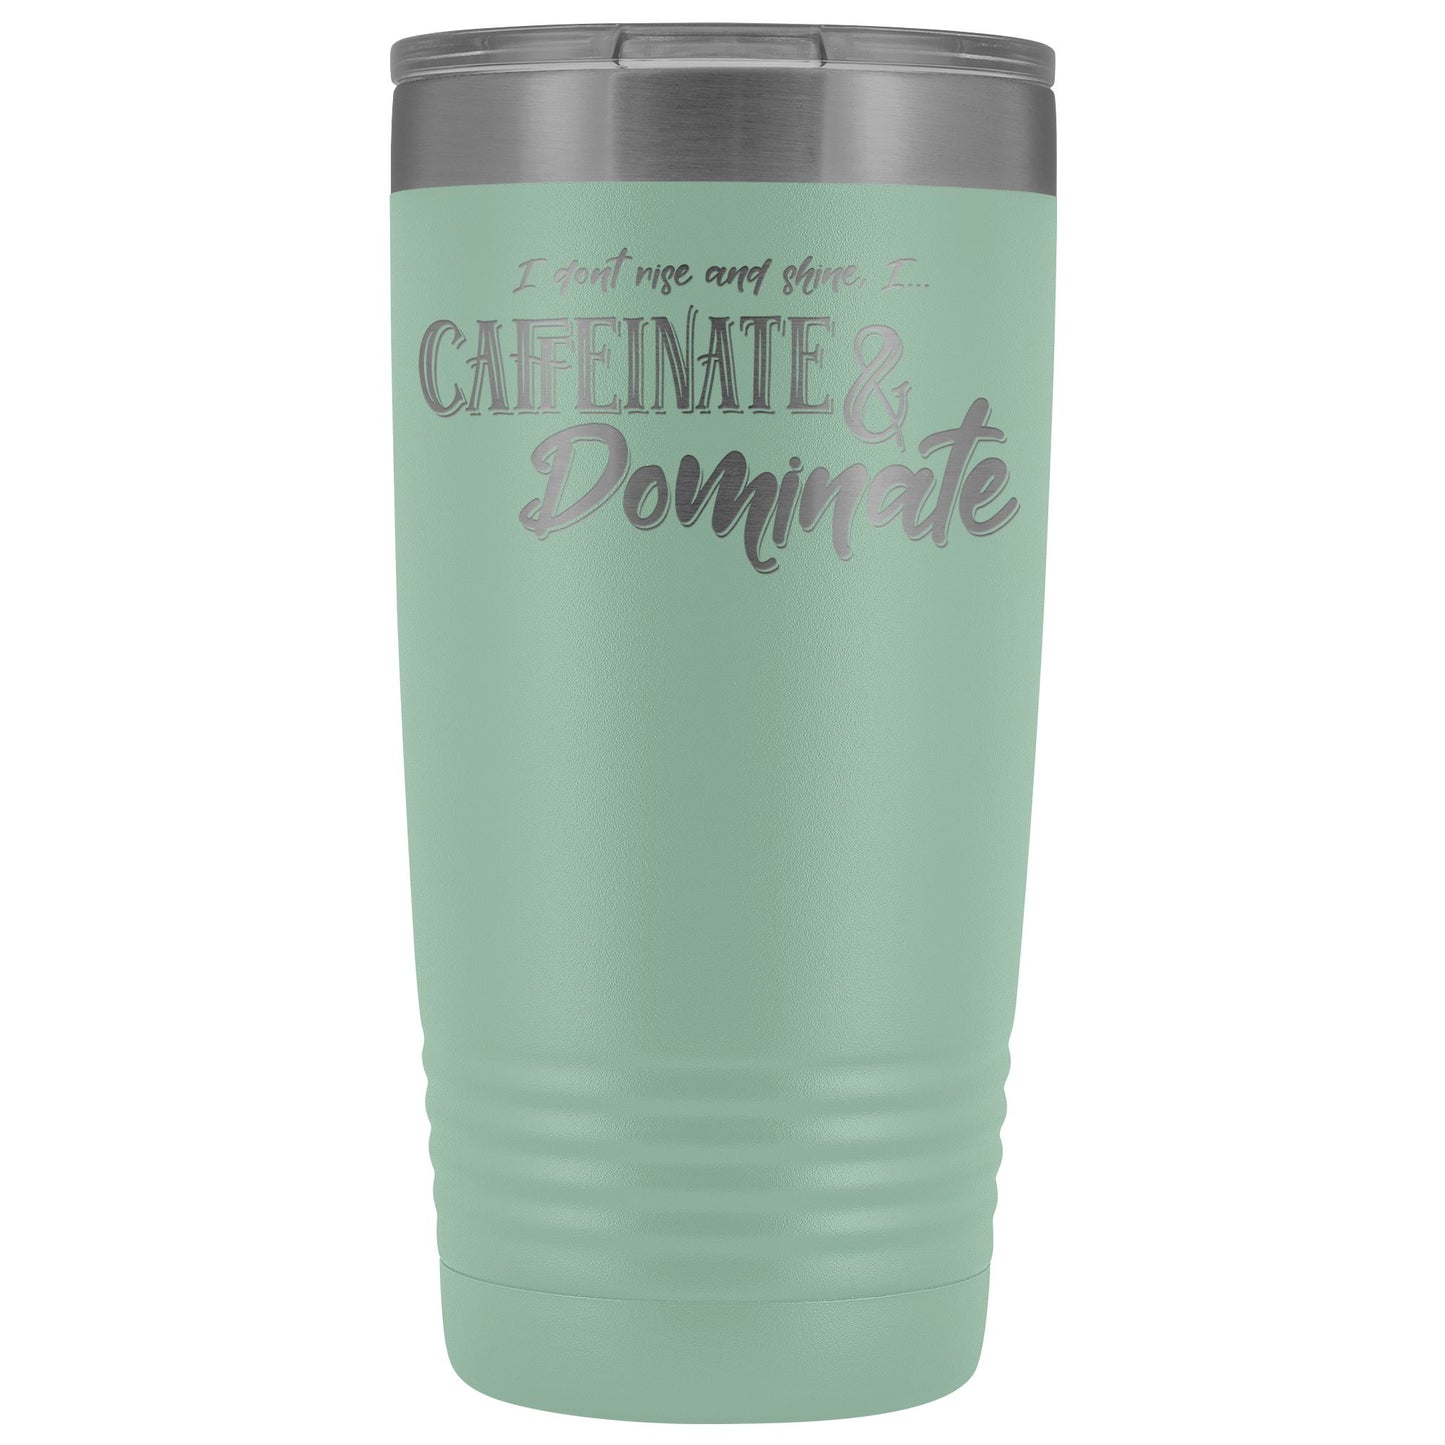 Caffeinate & Dominate 20oz. Insulated Coffee Tumbler